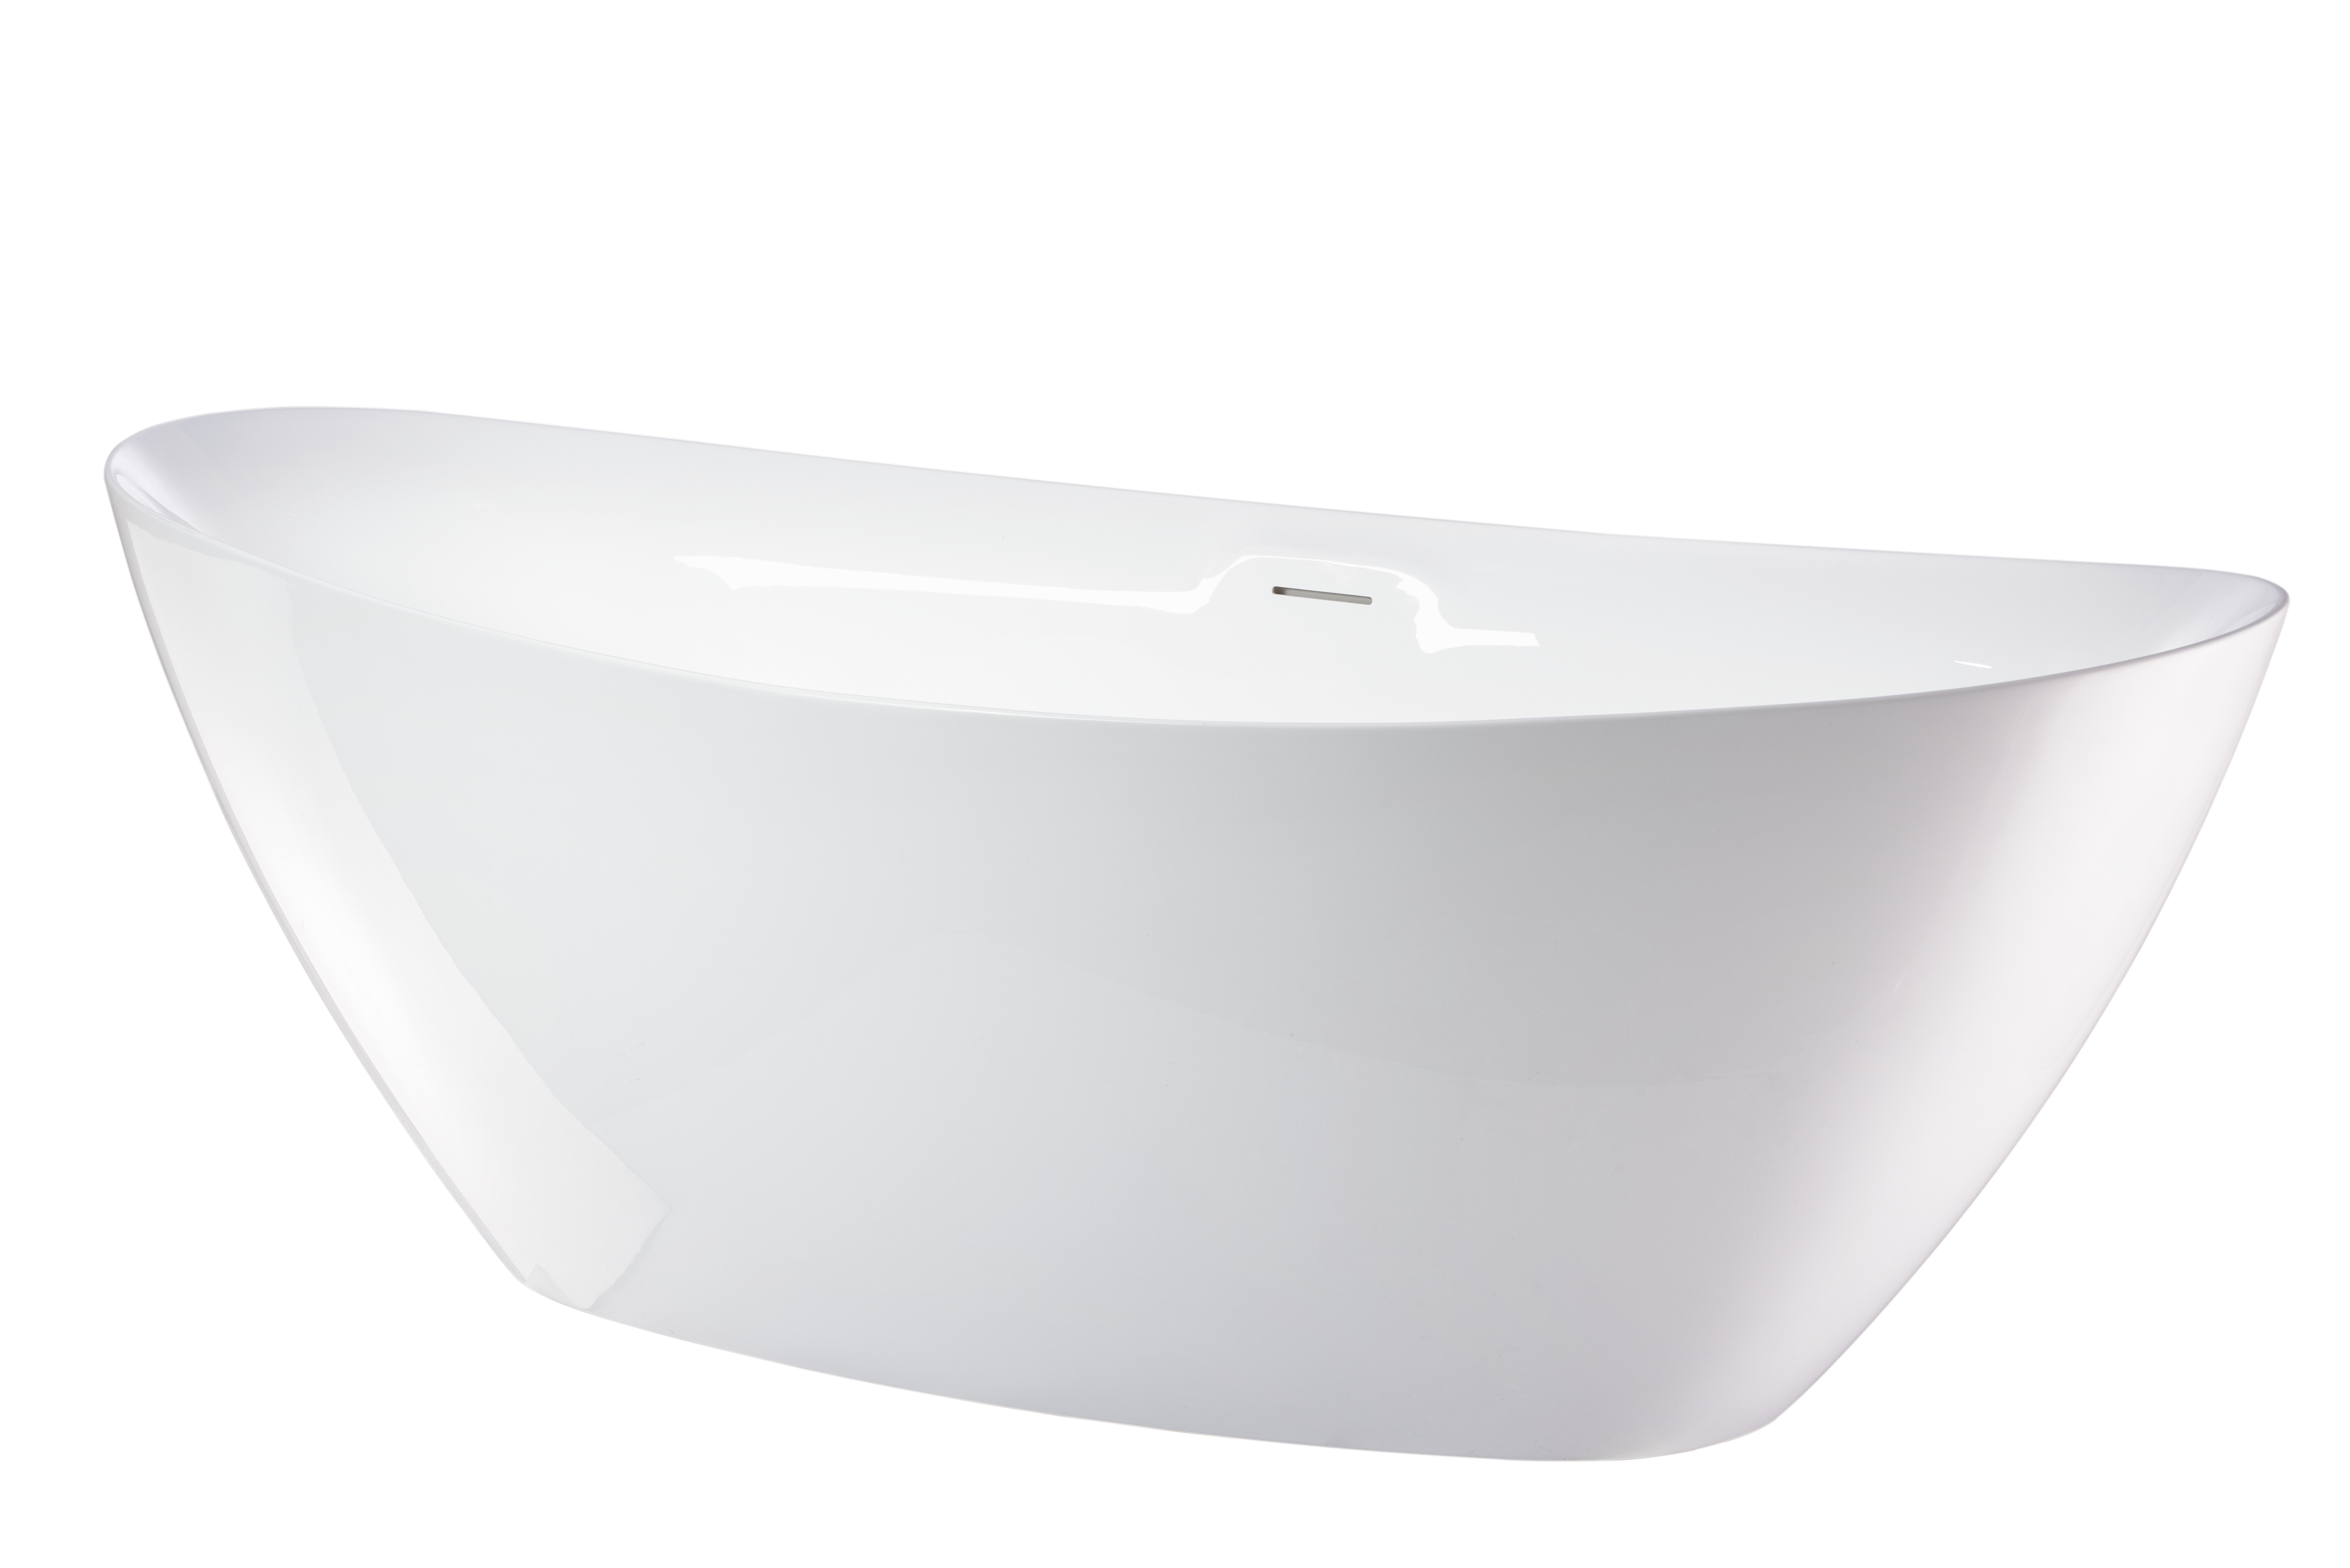 VA6807 Freestanding White Acrylic Bathtub with Polished Chrome Round Overflow & Pop-Up Drain -  70.9 x 33 x 26.4 in -  Vanity Art